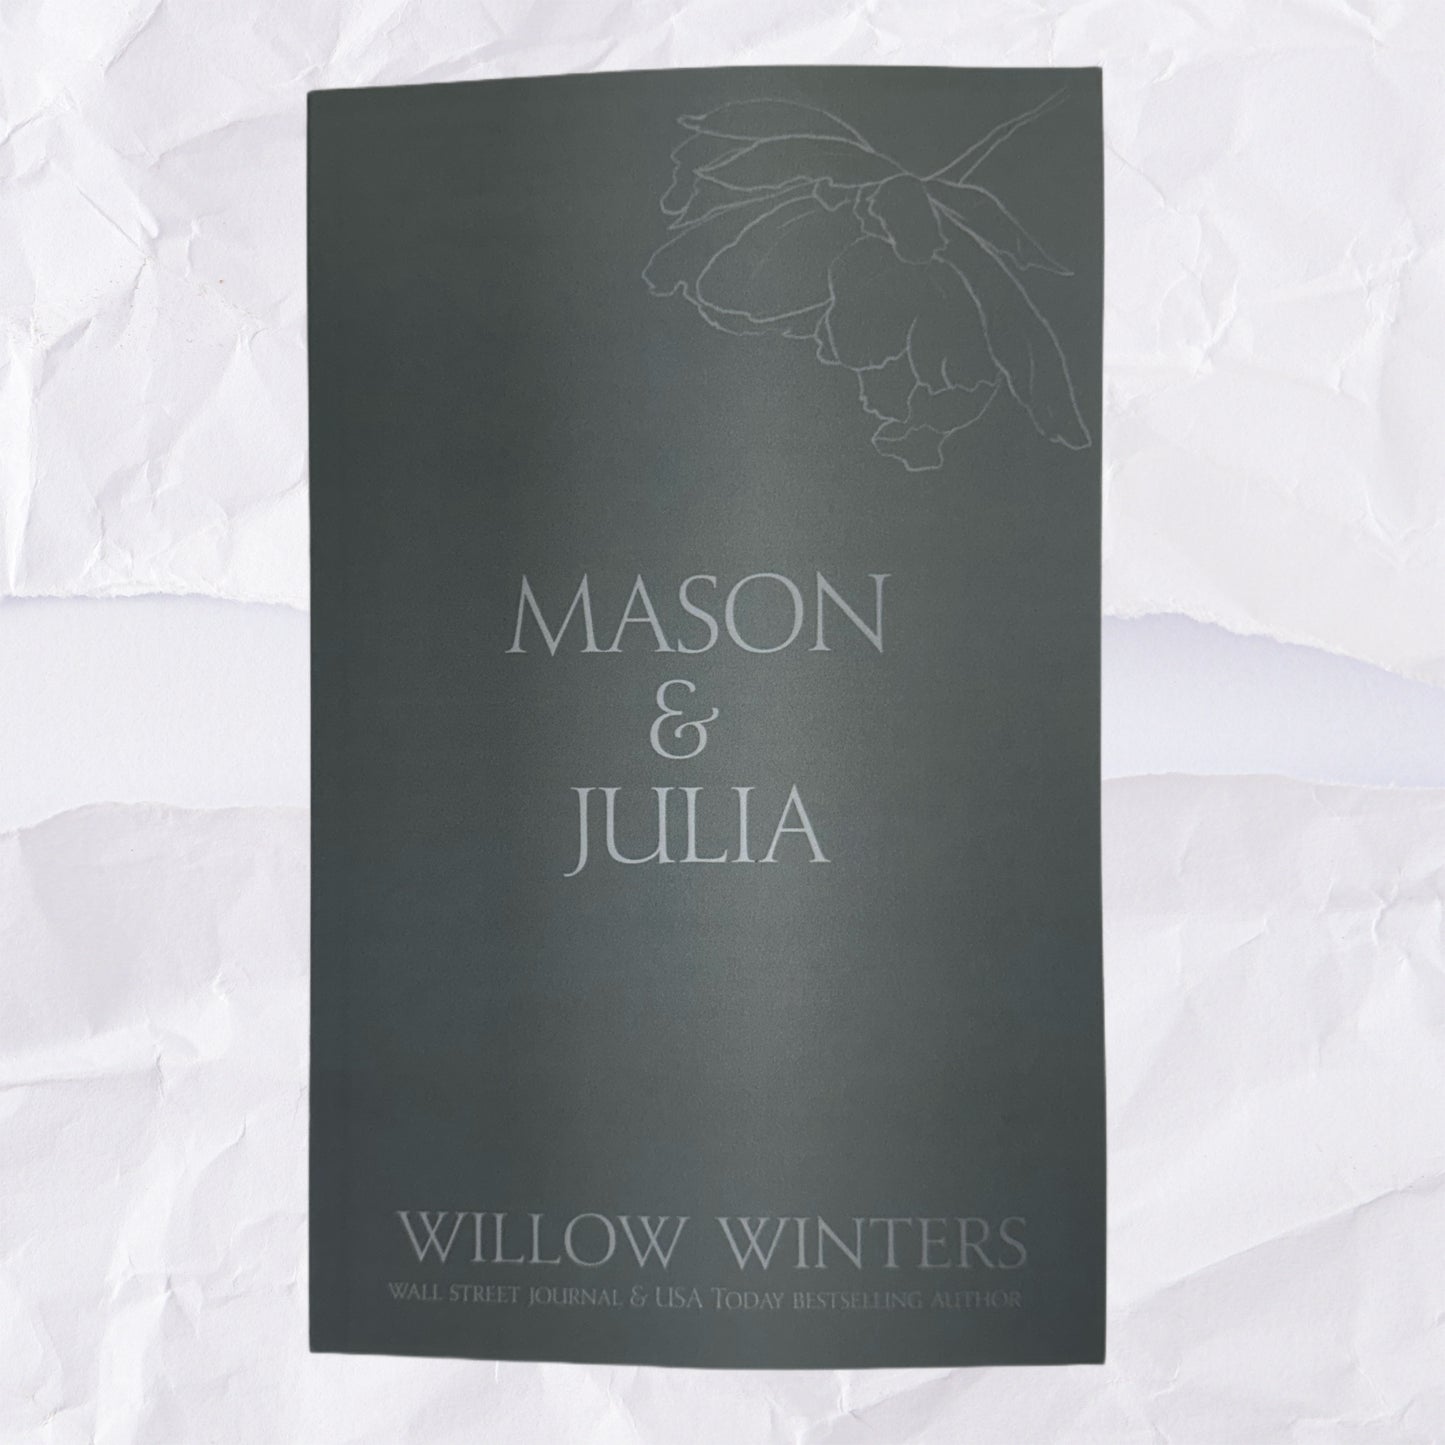 23) Mason & Julia 2: Discreet Series by Willow Winters